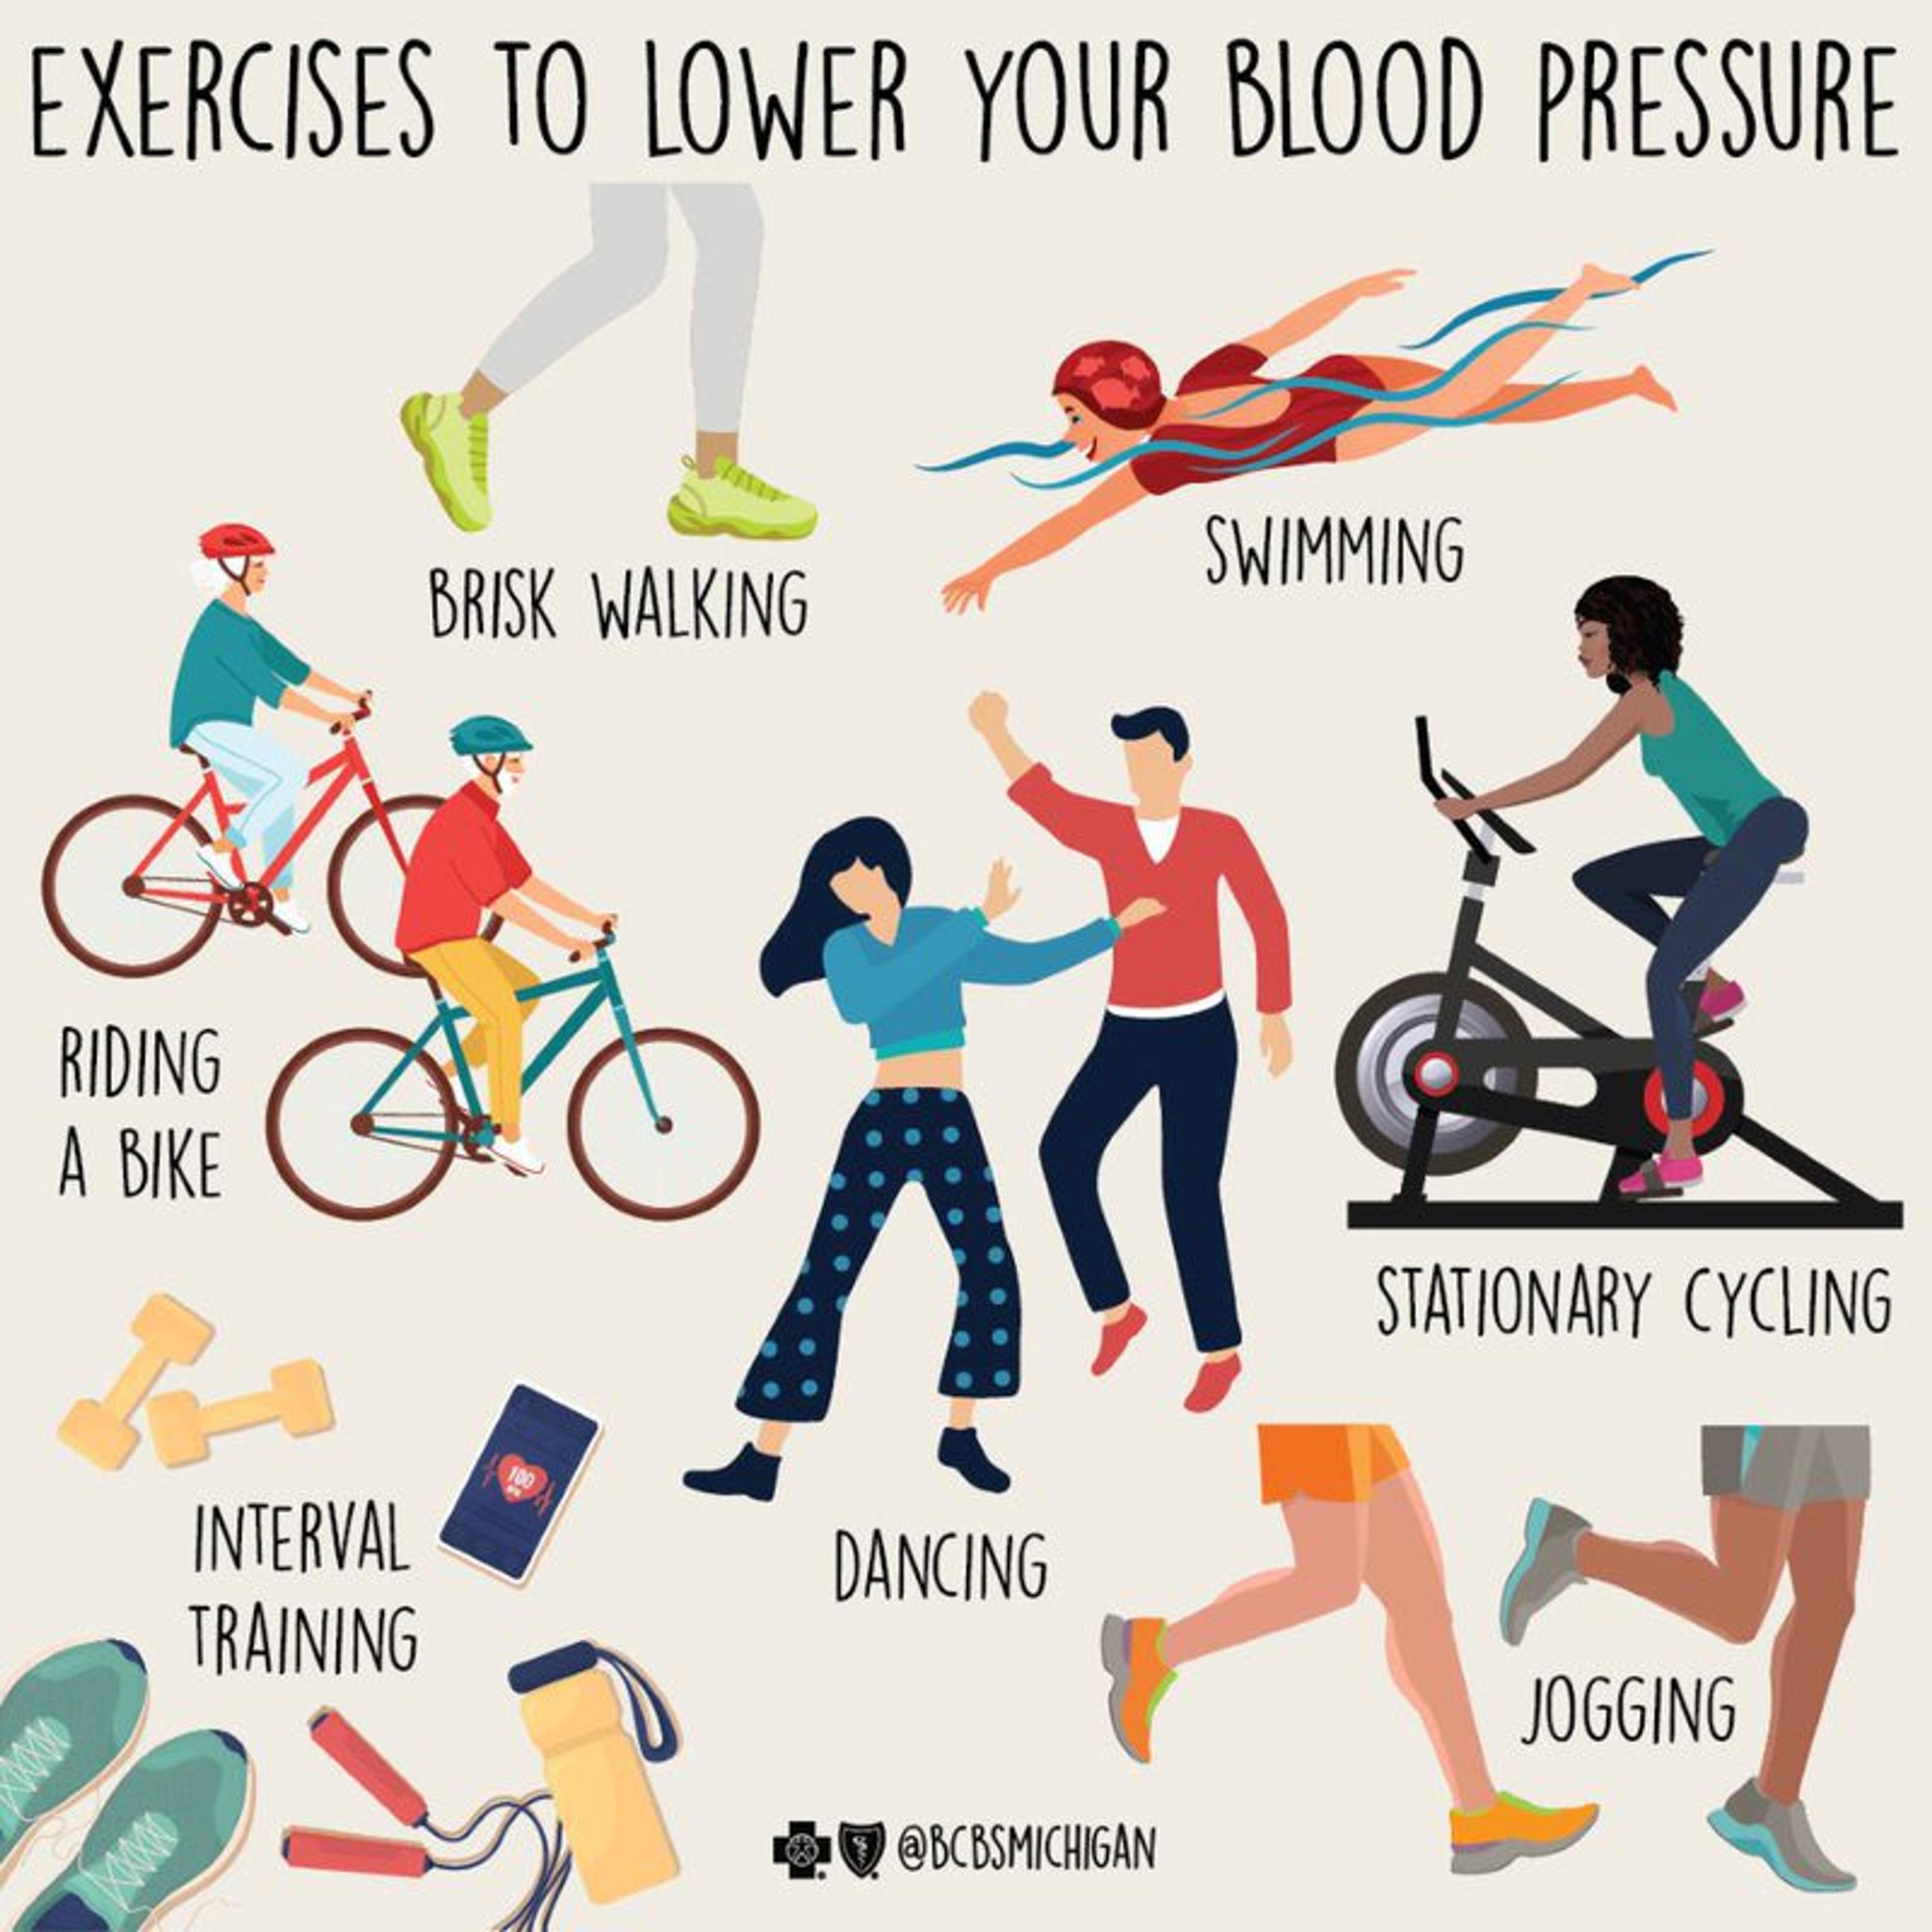 high blood pressure